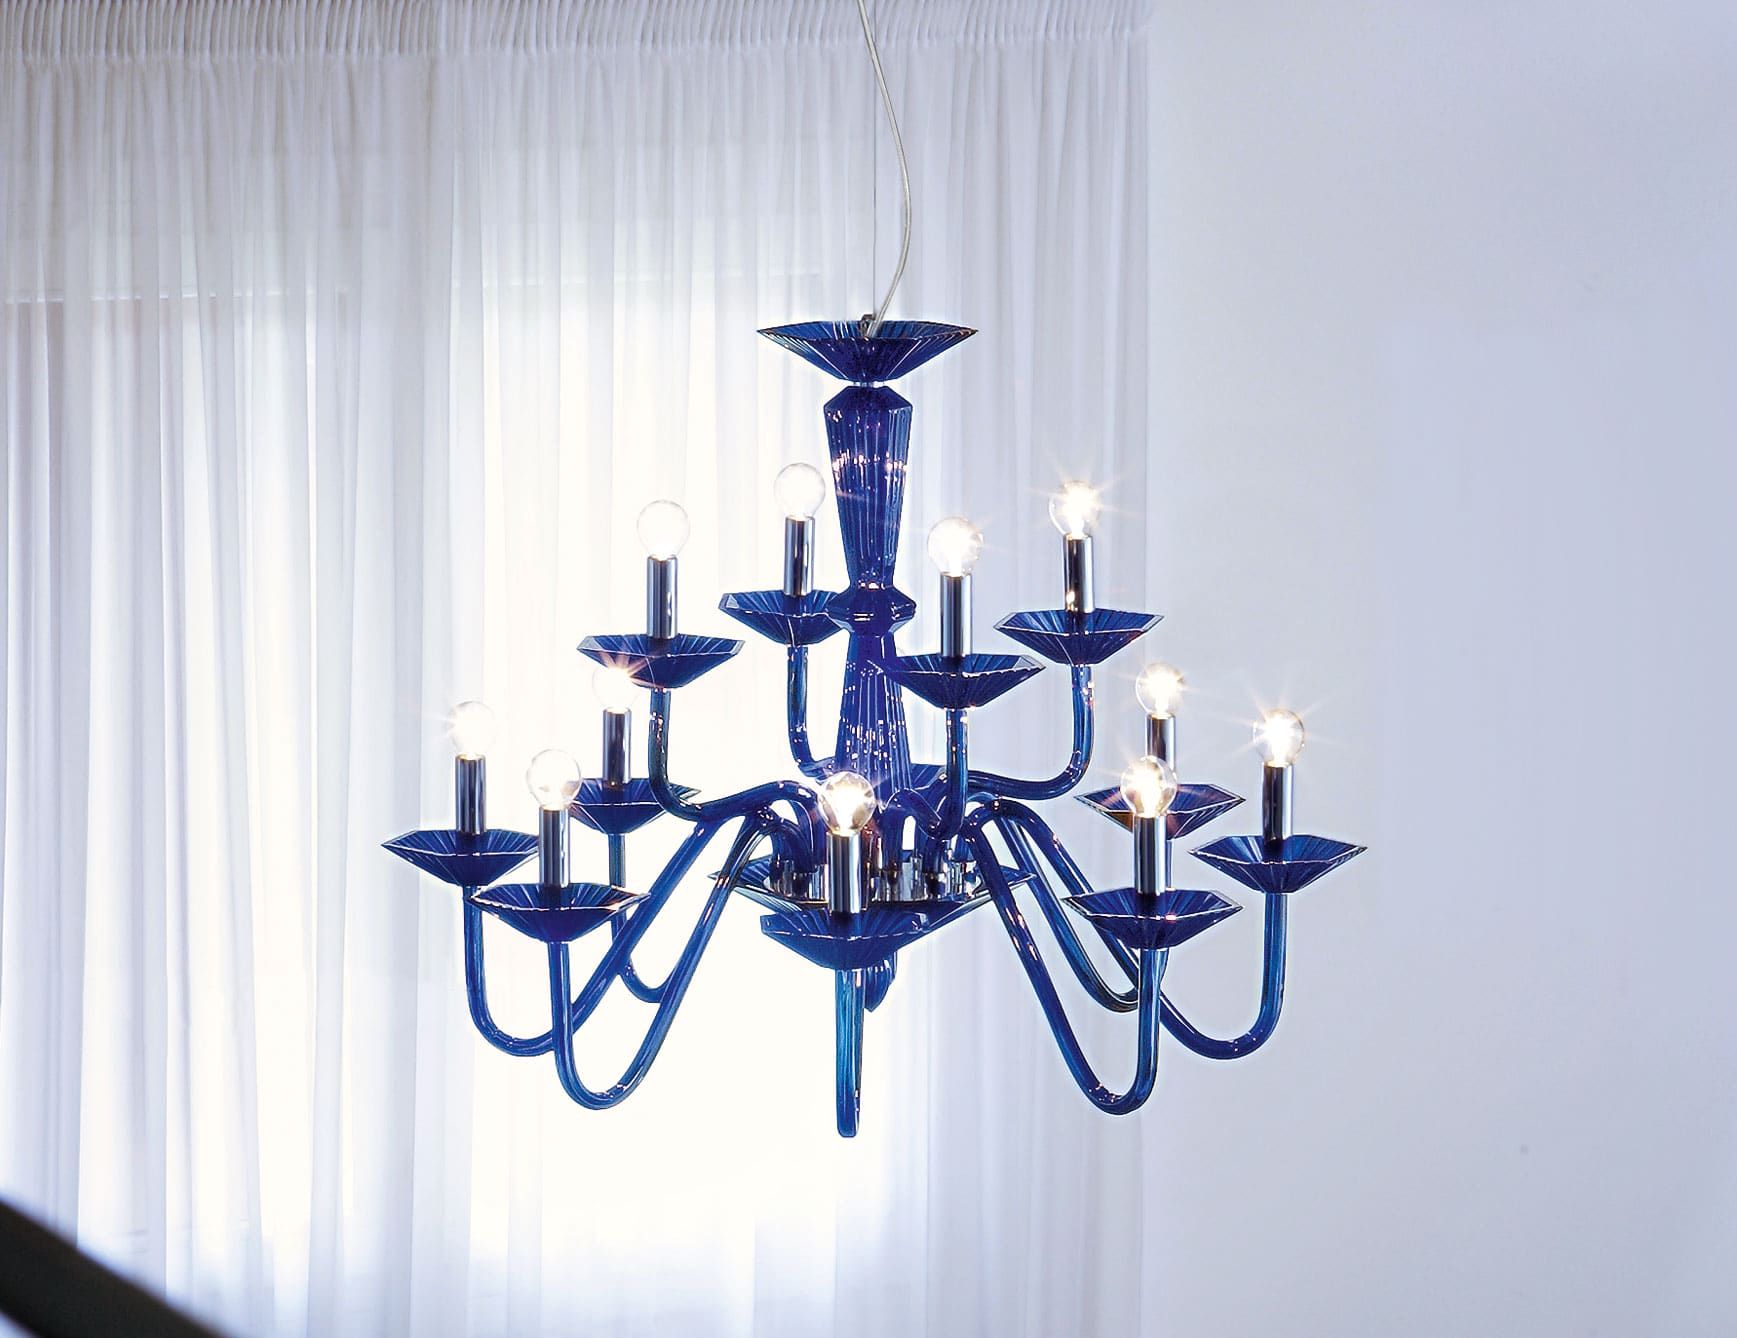 Evergreen modern Italian chandelier with blue glass